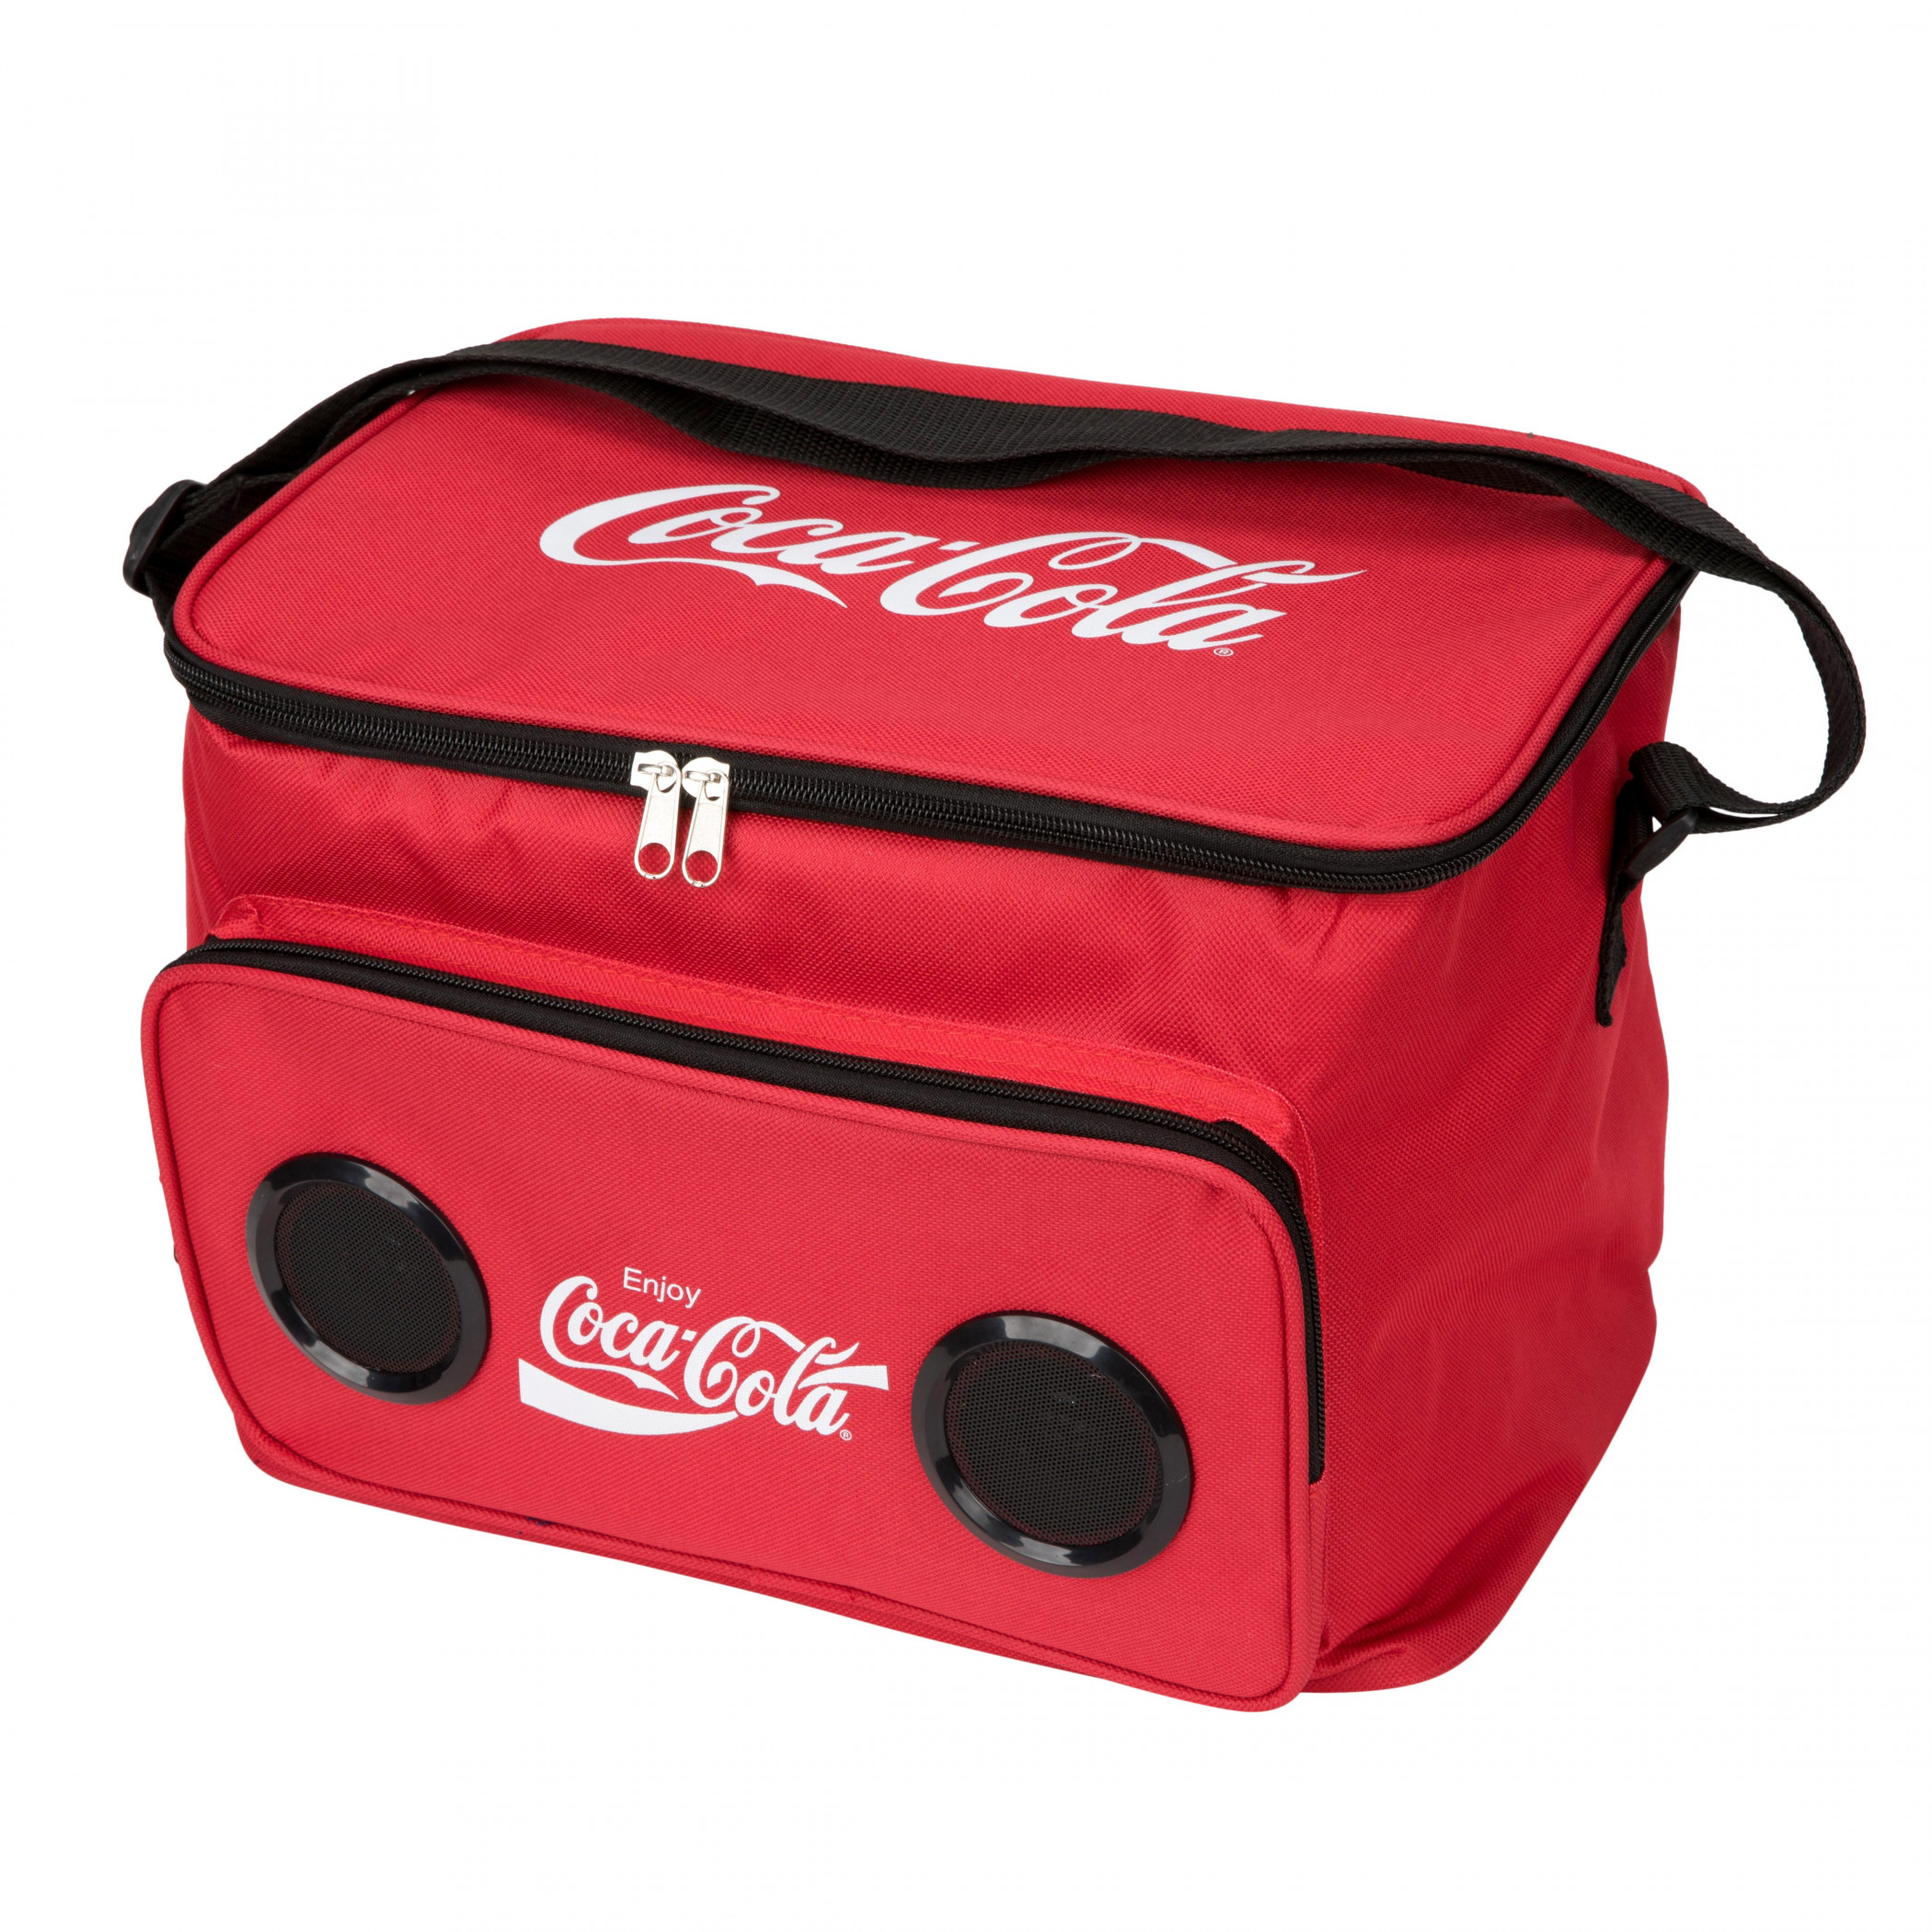 Coca-Cola Cooler Bag with Built in Bluetooth Speaker